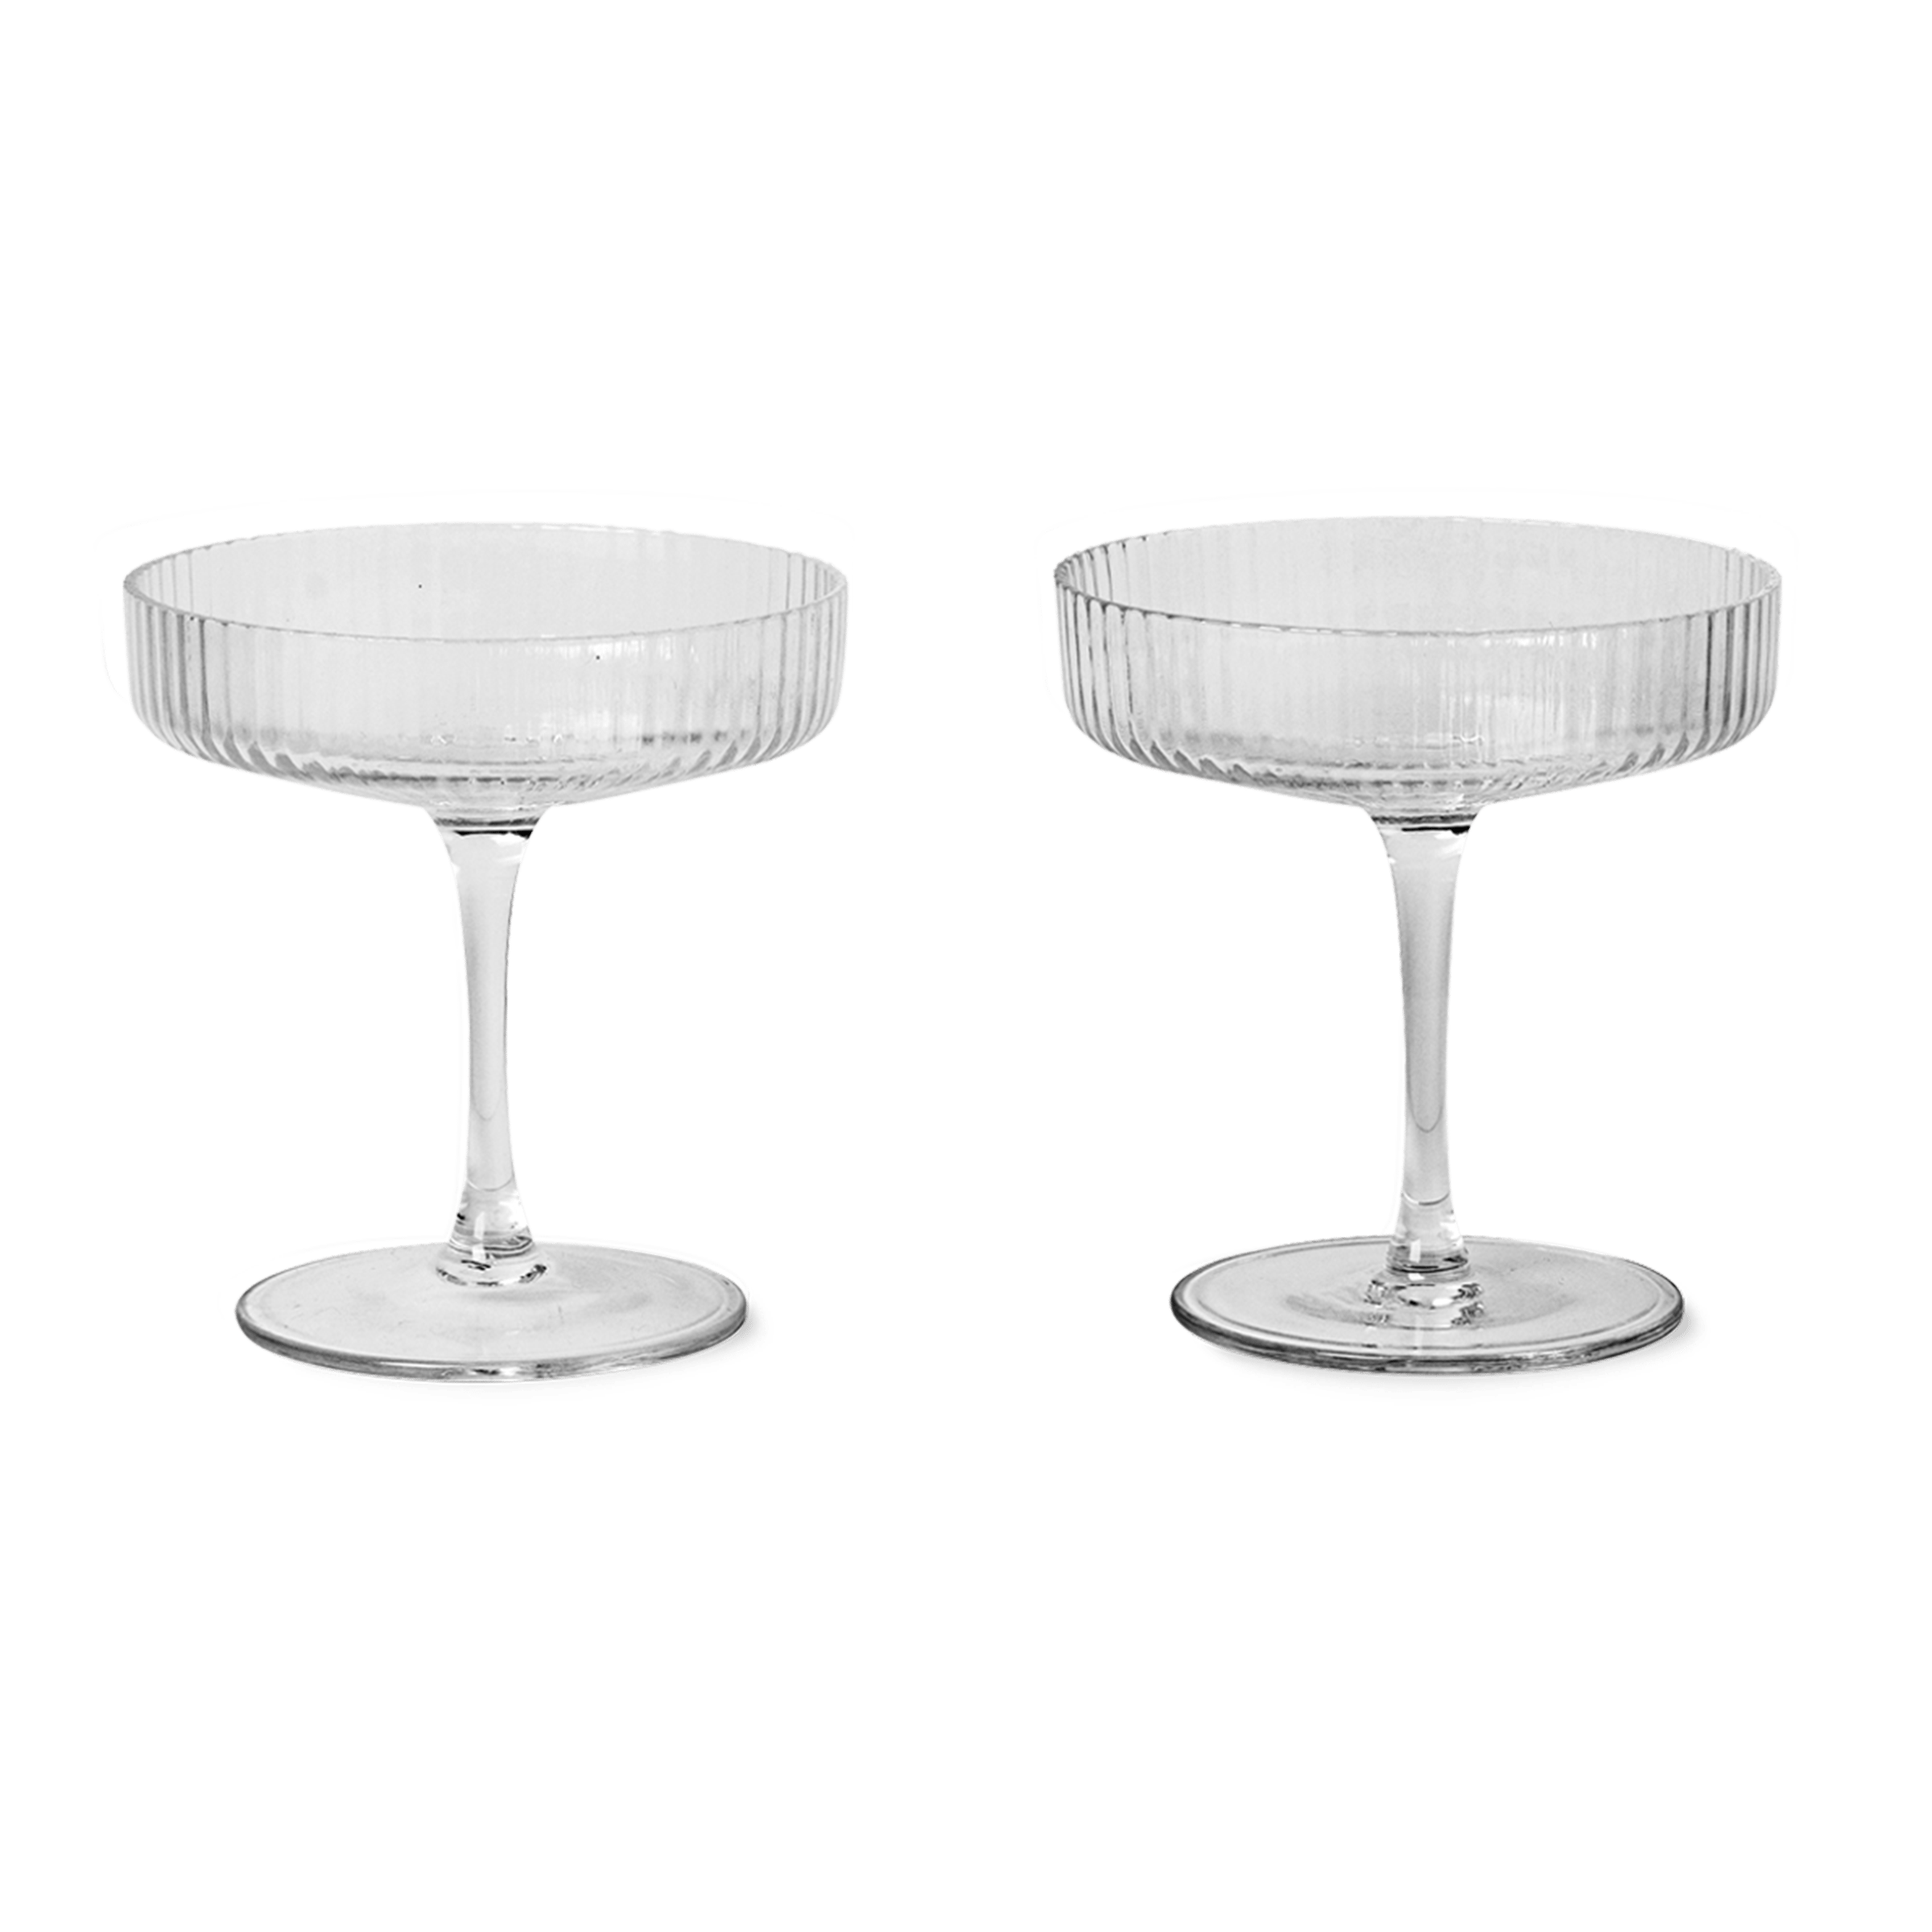 Vintage Wine Glasses, Glass Drinkware Sets, Ripple Drinkware